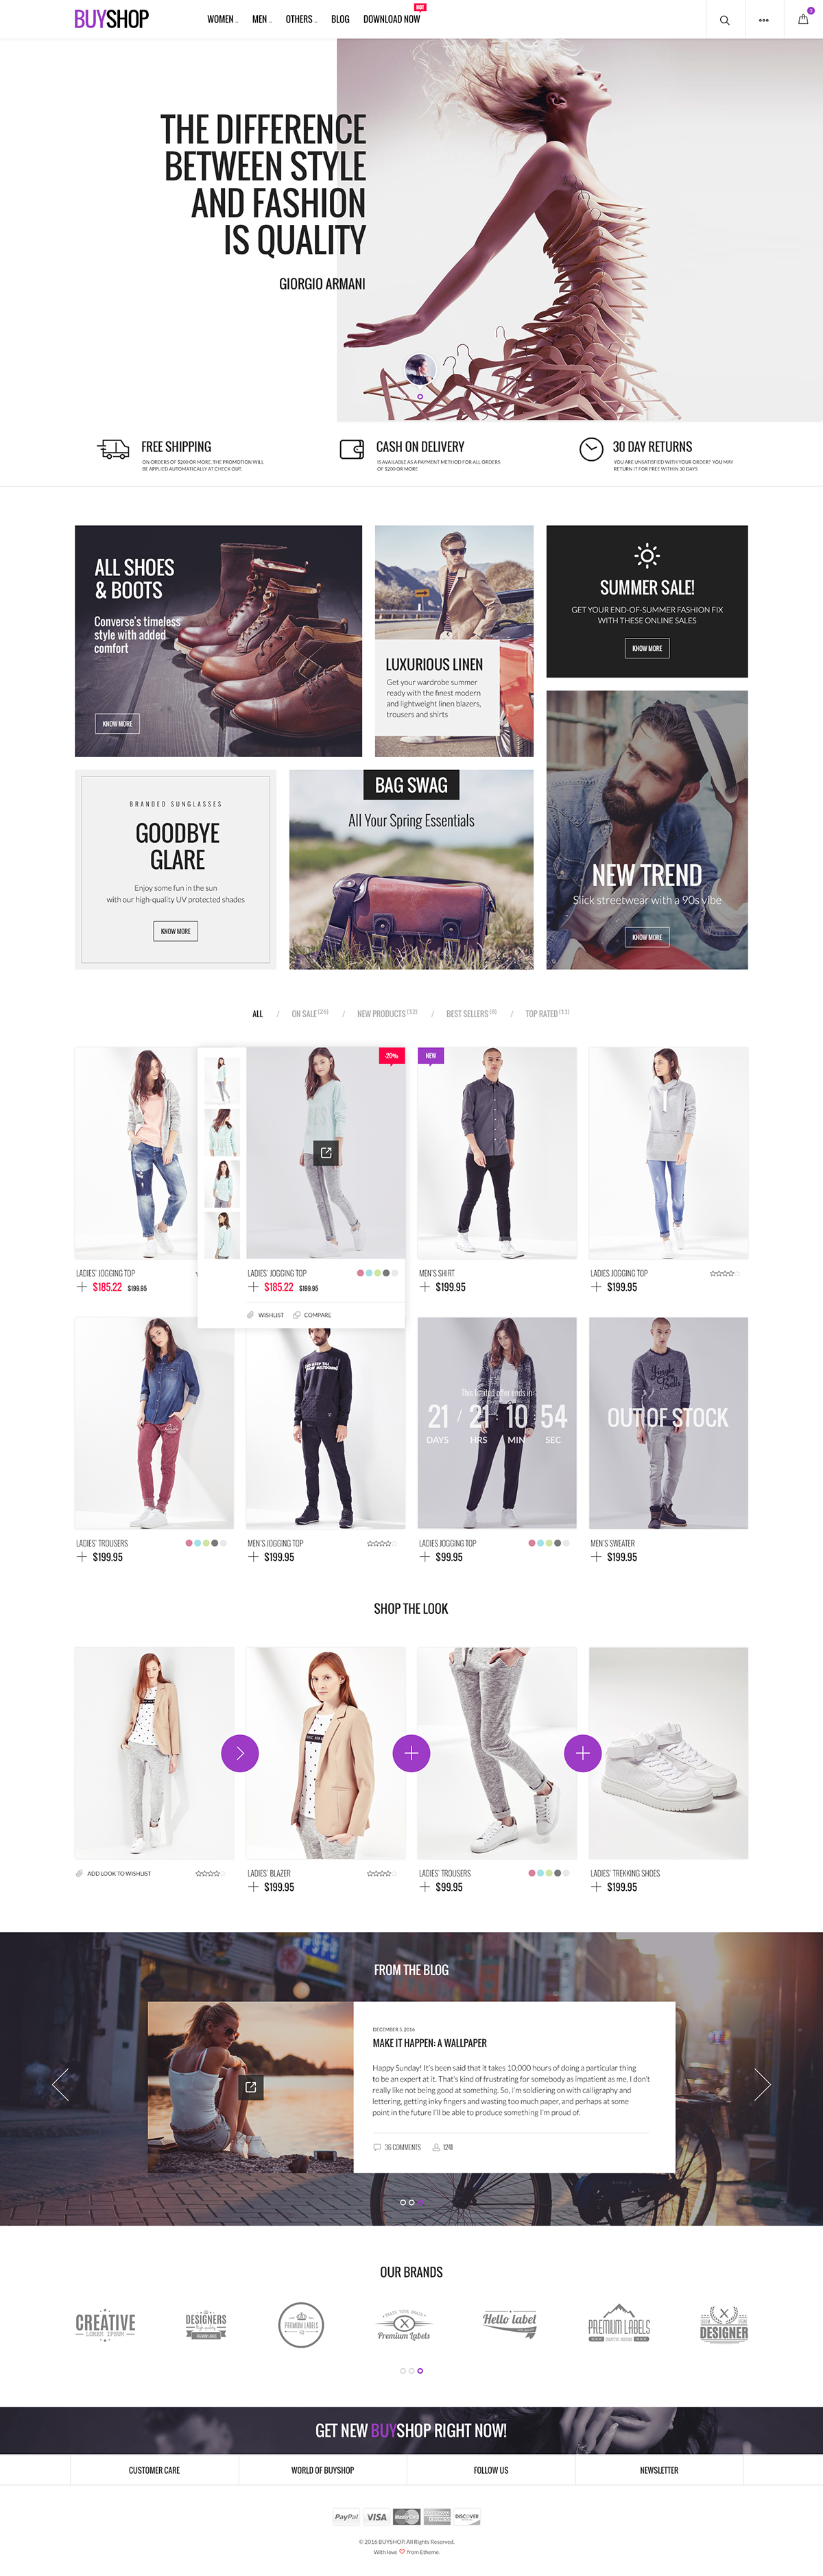 eCommerce design online store BuyShop